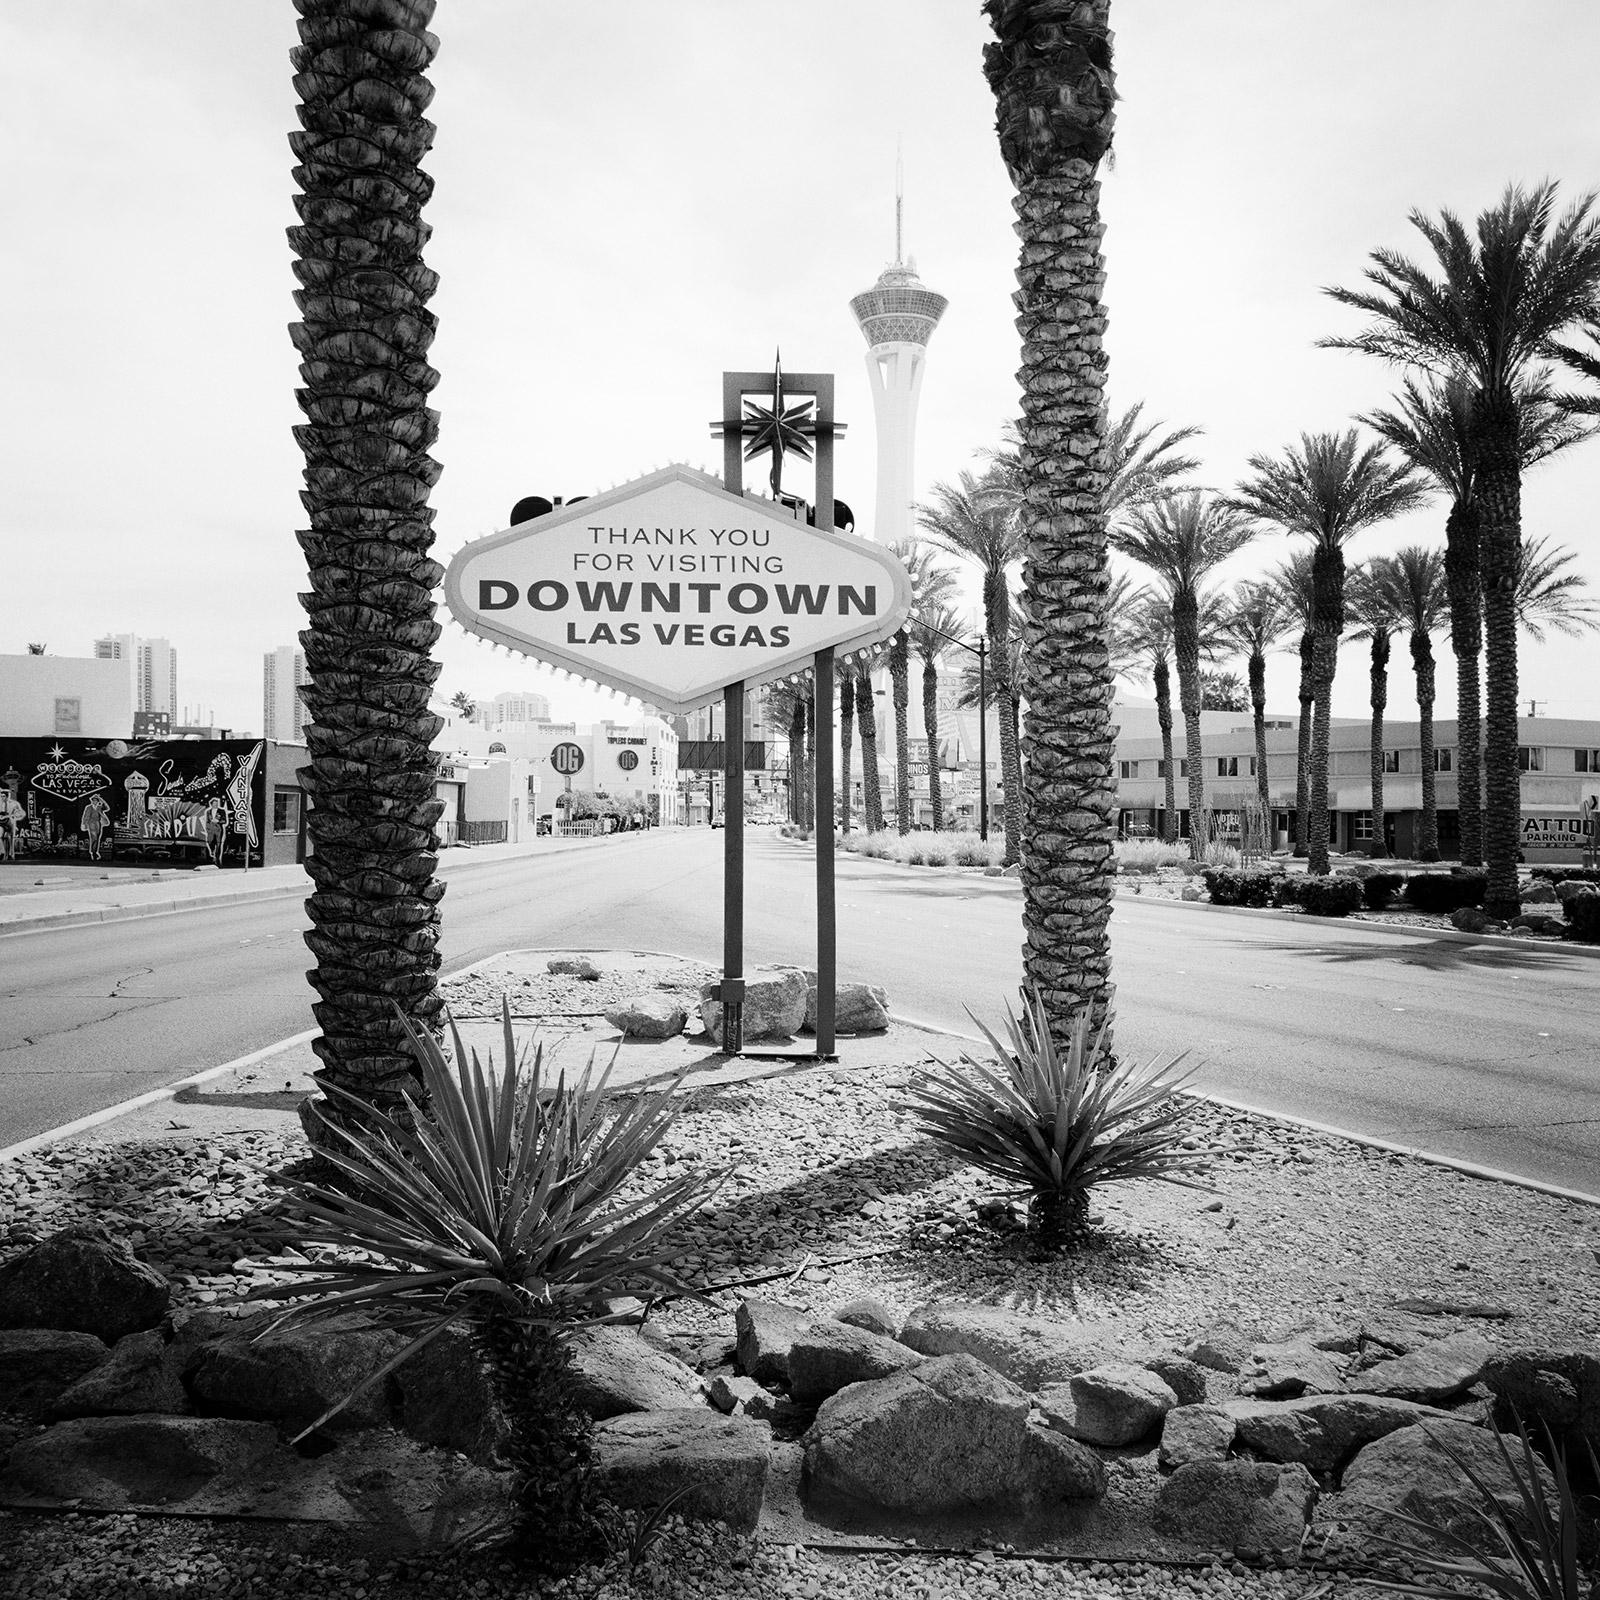 Gerald Berghammer Landscape Photograph - Downtown Las Vegas, Nevada, USA, black & white prints, landscapes, palm trees